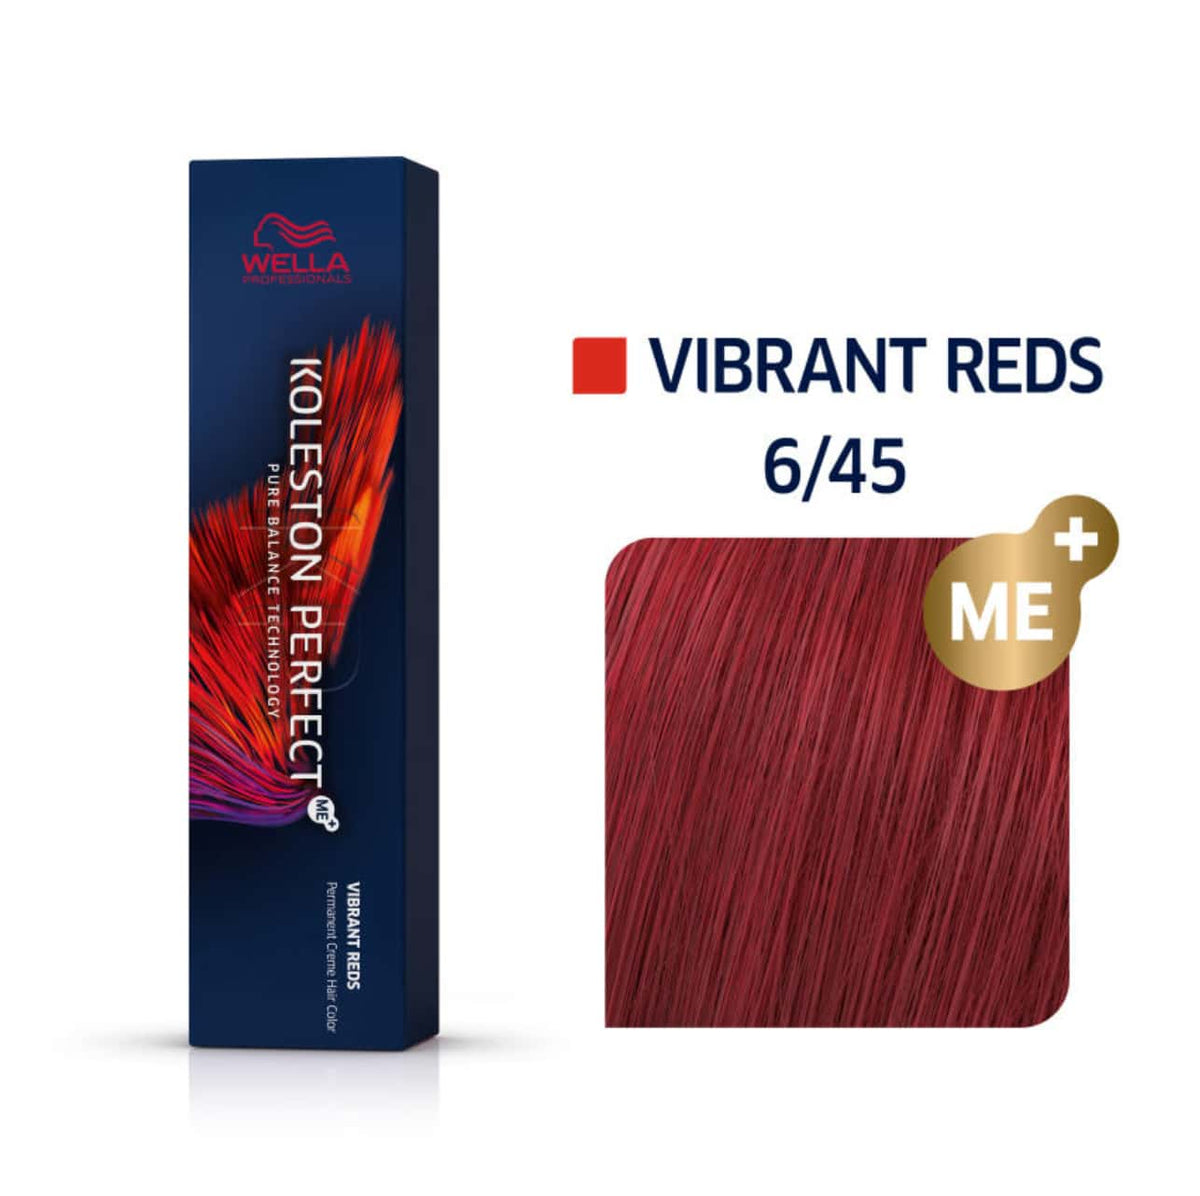 Wella Koleston Vibrant Reds 6/45 Hair Colour (60ml) - beautyhair.co.ukHair Colour